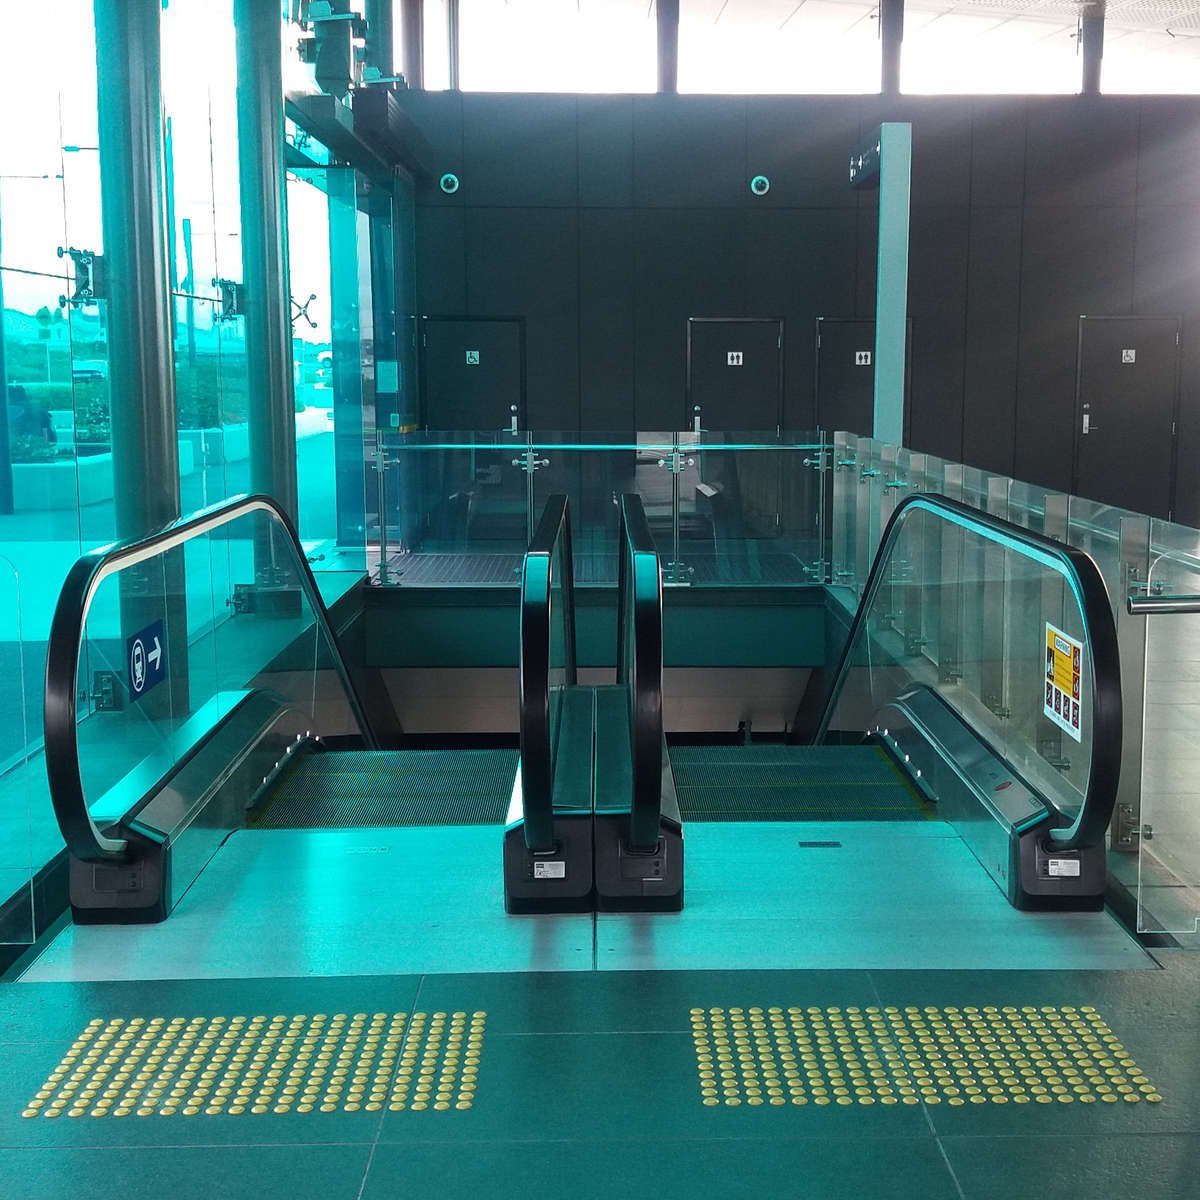 TacPro yellow polyurethane tactile indicators on bluestone tiles at top of train station escalators